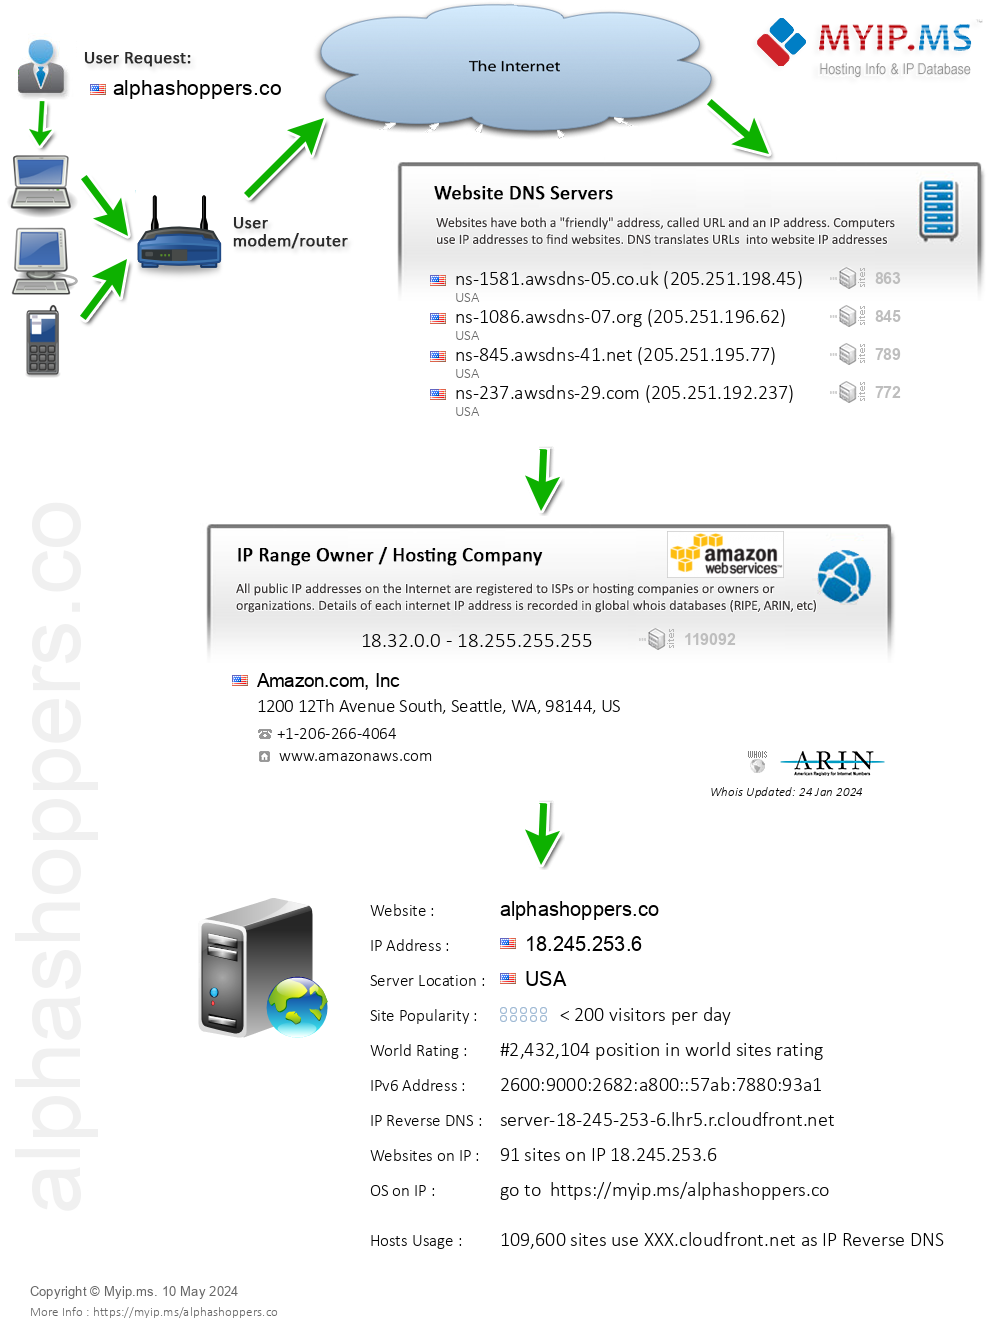 Alphashoppers.co - Website Hosting Visual IP Diagram